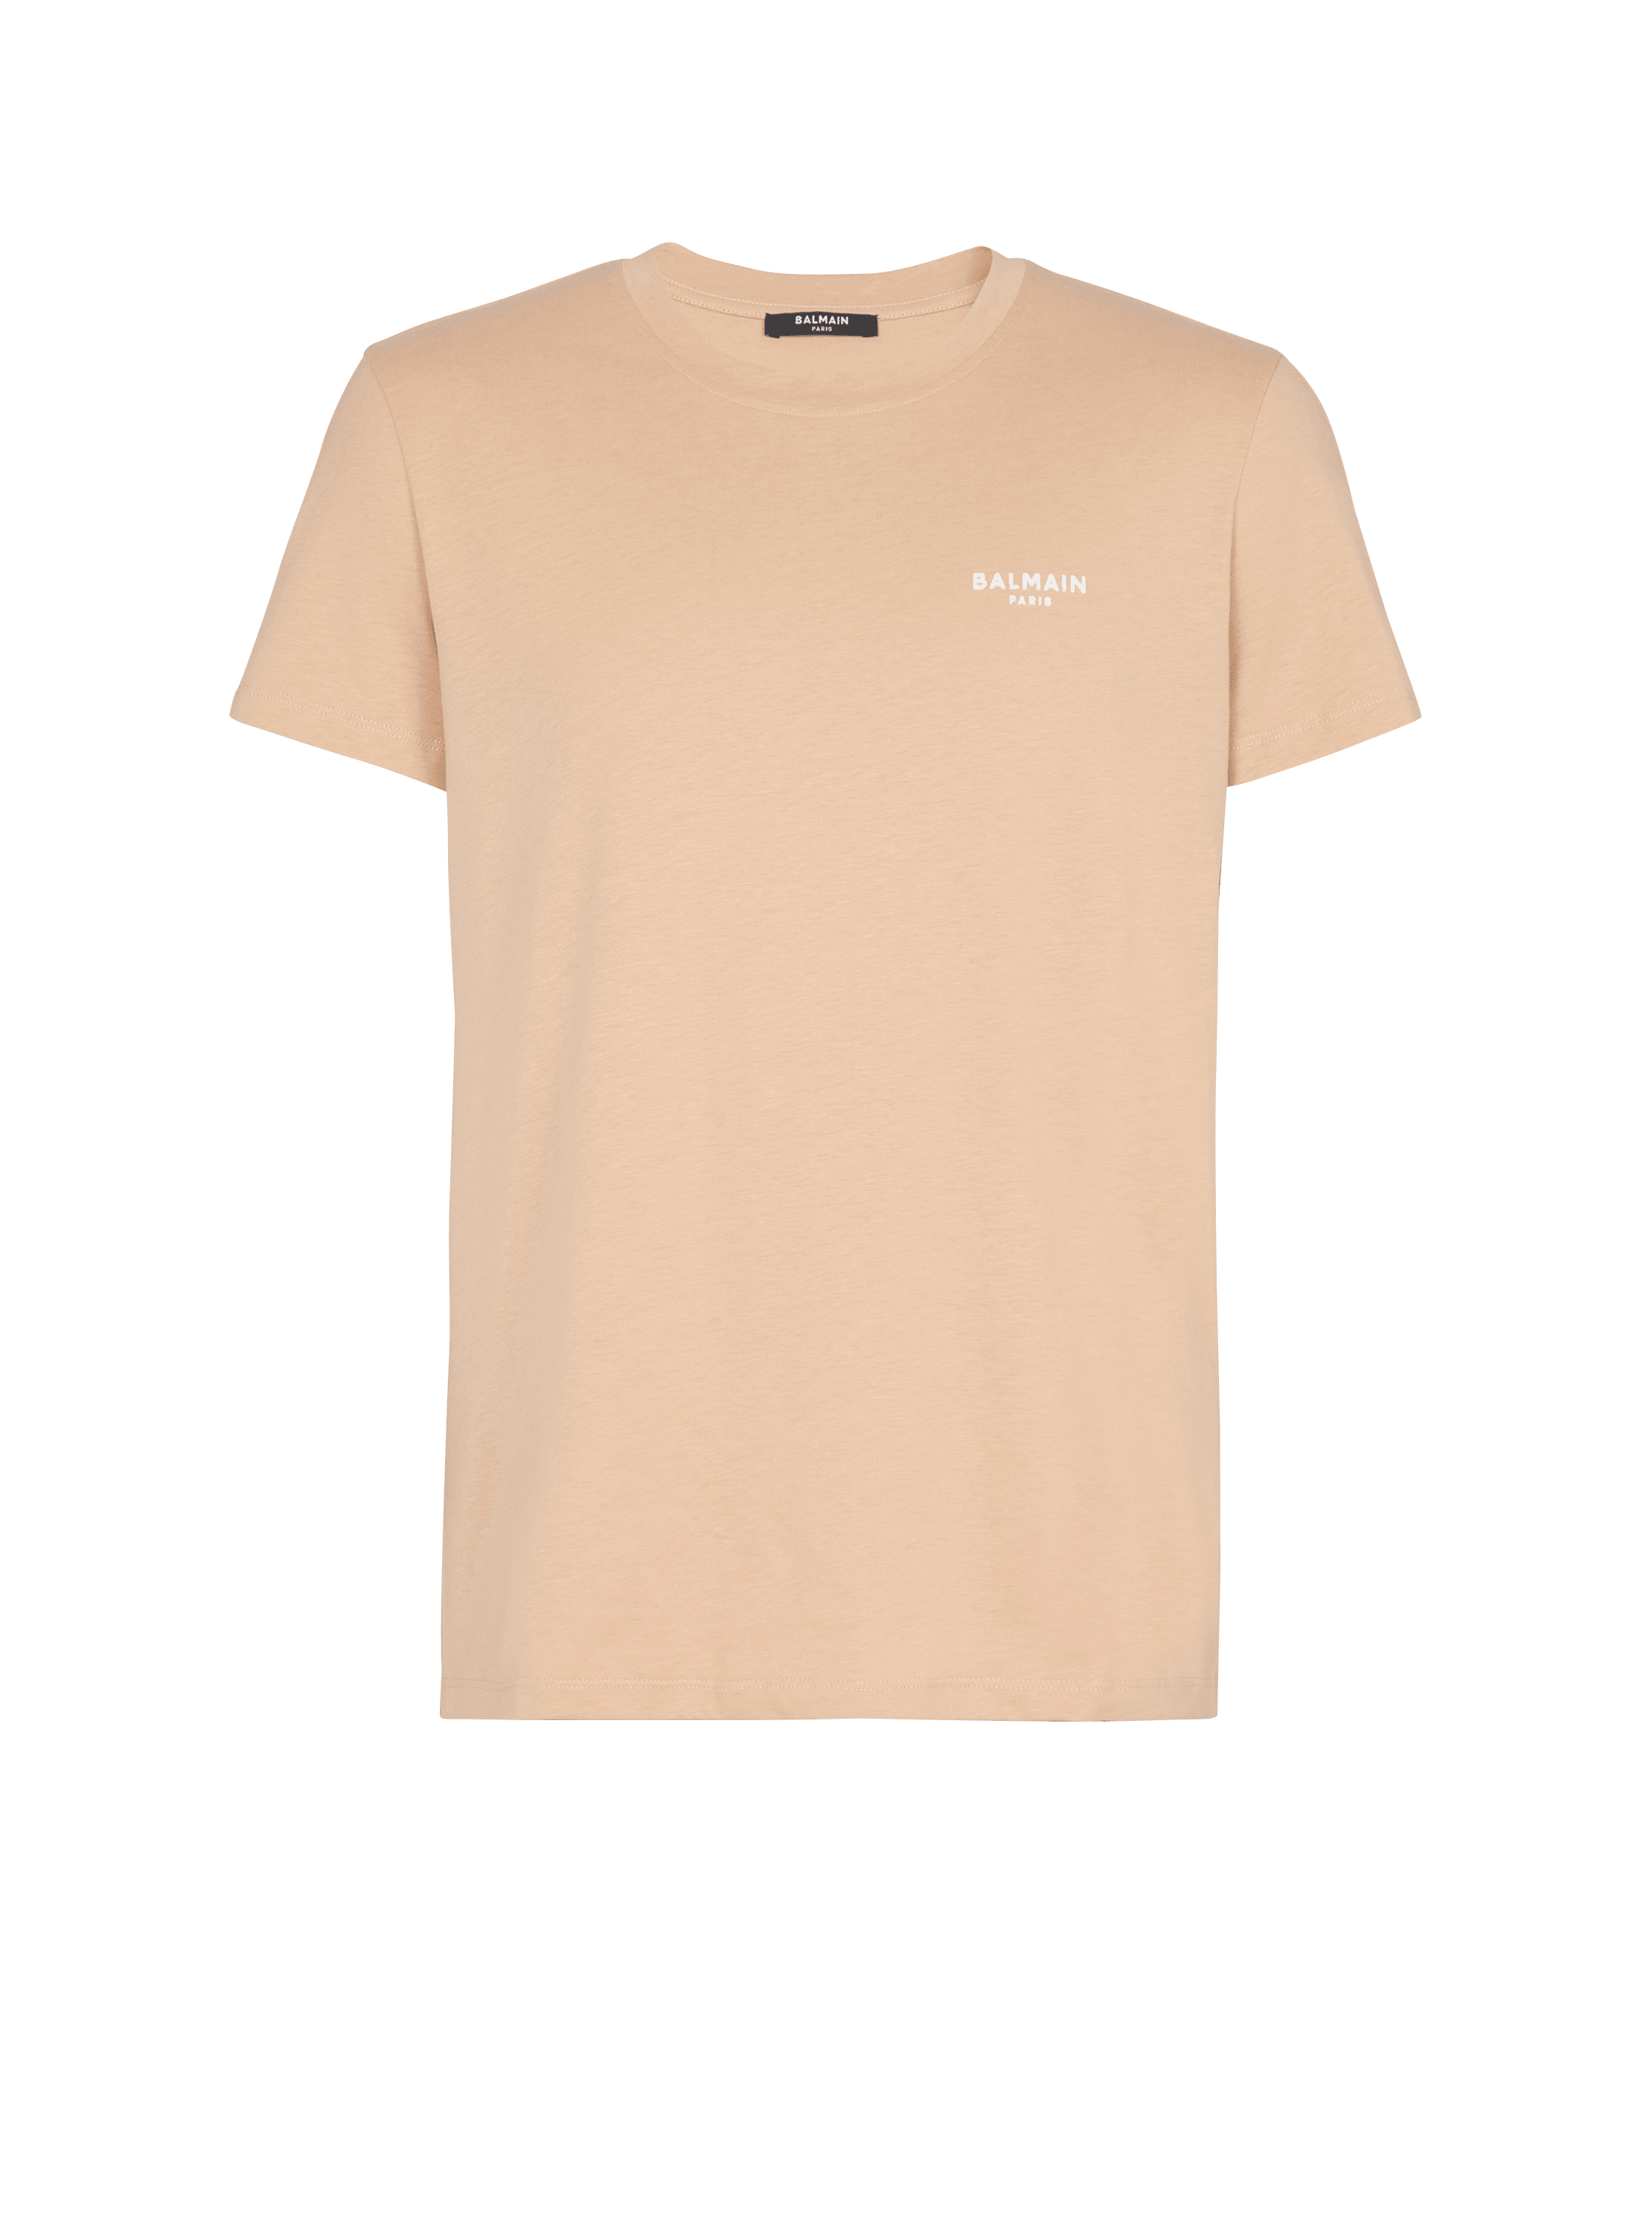 Flocked Balmain T-shirt, beige, hi-res